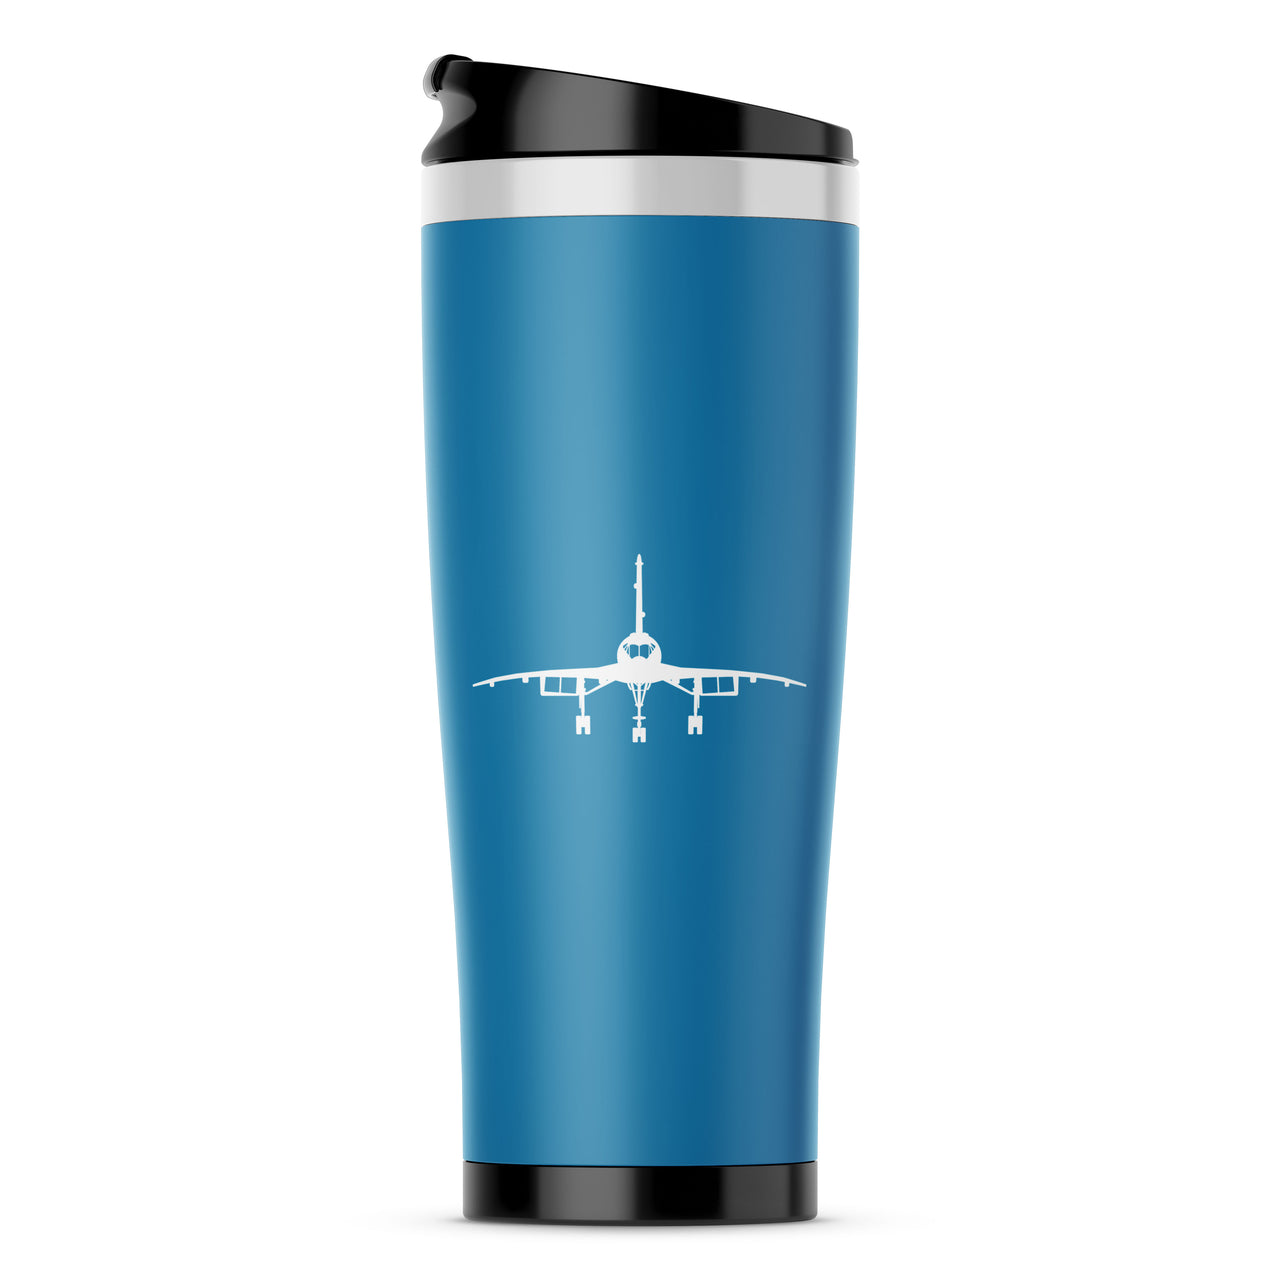 Concorde Silhouette Designed Travel Mugs